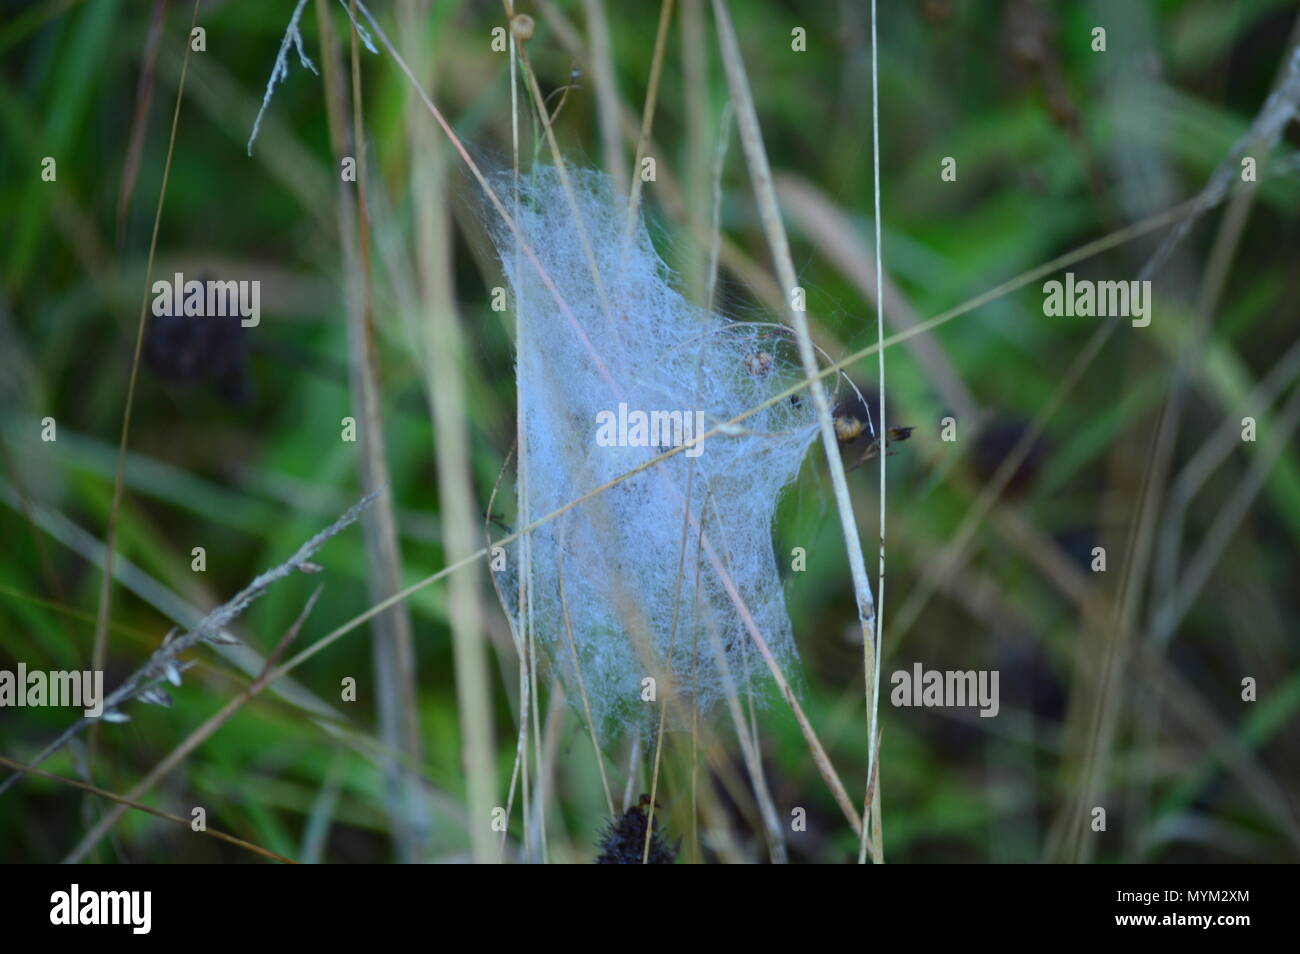 Spider Web In Rebedul Meadows In Lugo. Flowers Landscapes Nature. August 18, 2016. Rebedul Becerrea Lugo Galicia Spain. Stock Photo